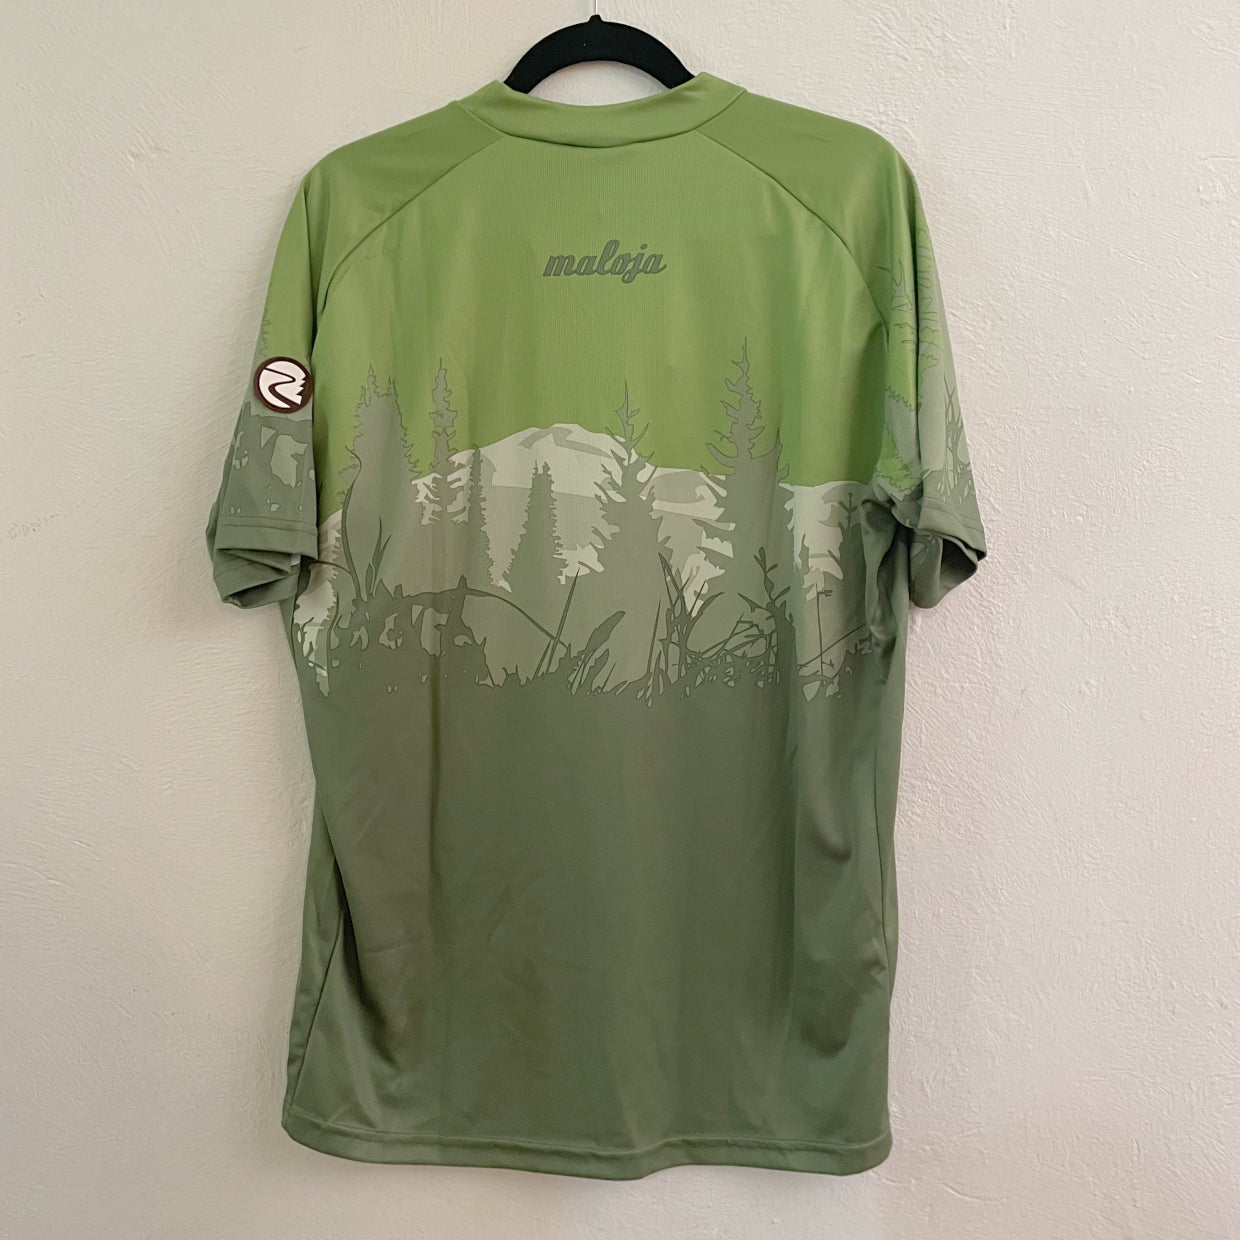 MALOJA Freeride Shirt 1/2 - Forest - deep forest - L